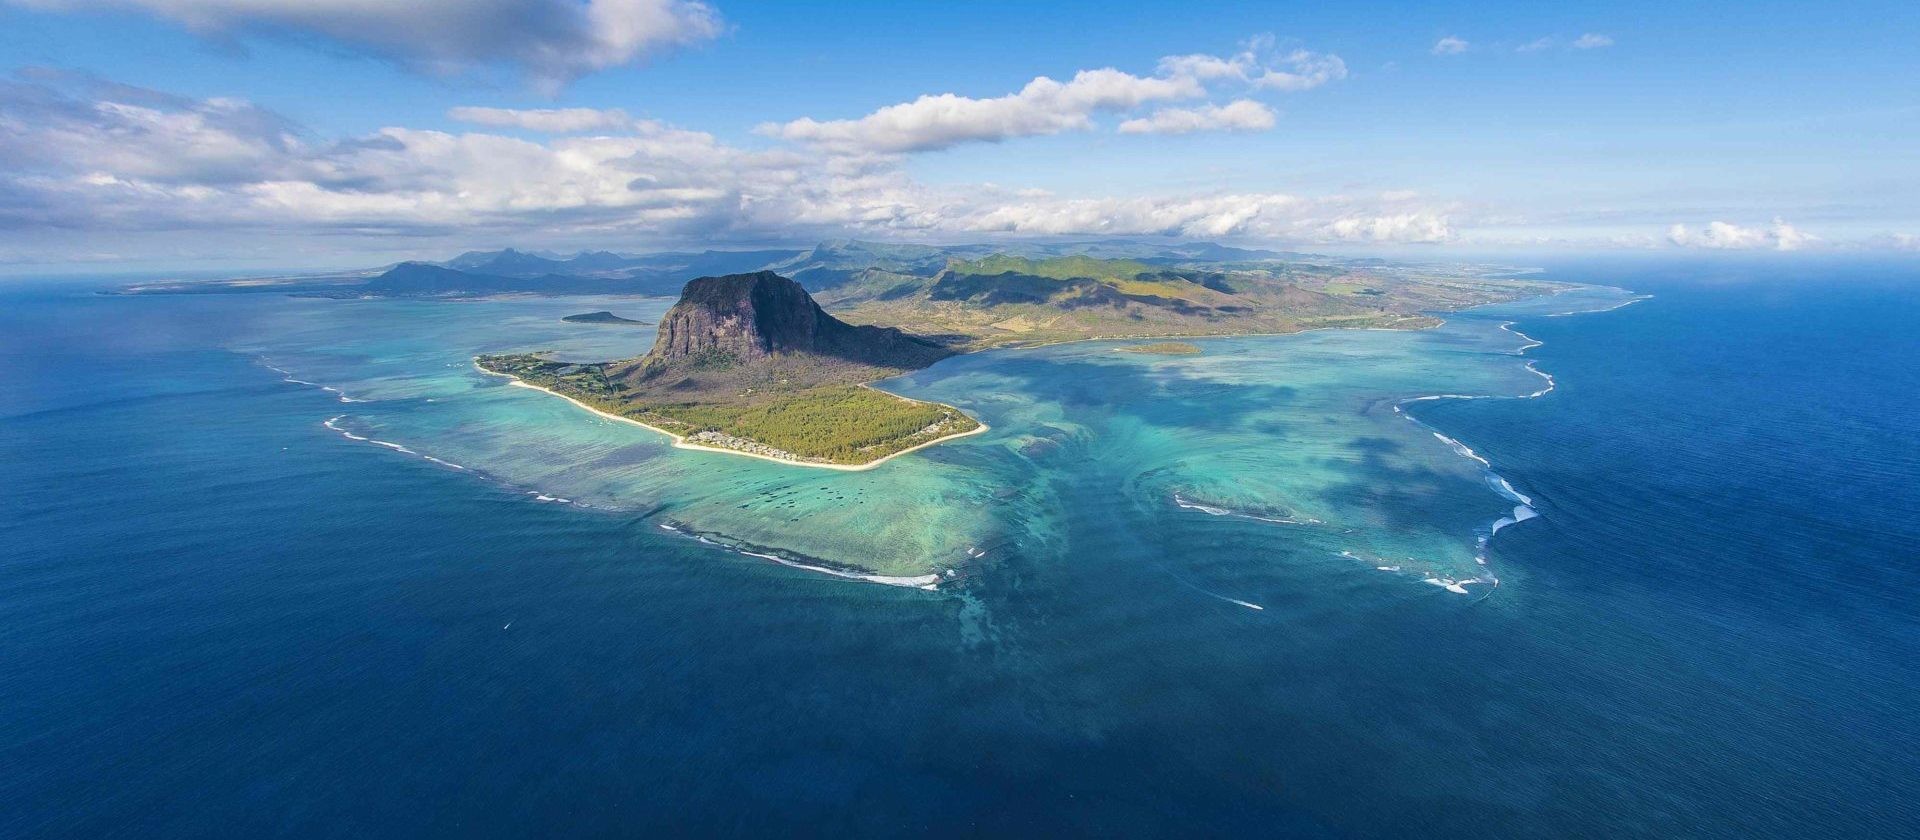 Mauritius, Indian Ocean - Catamaran cruise